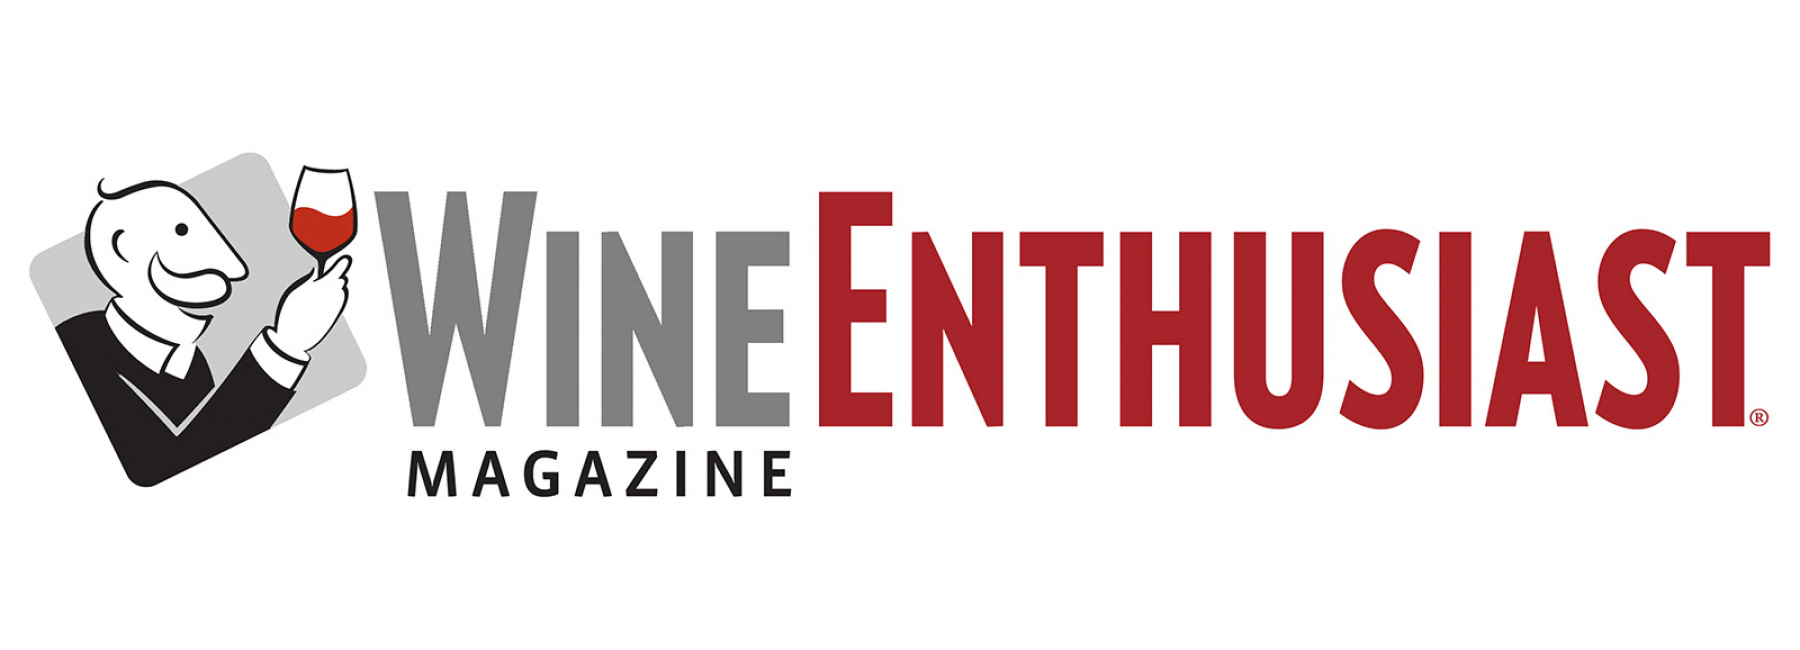 Wine Enthusiast Magazine Logo 2 Kopie